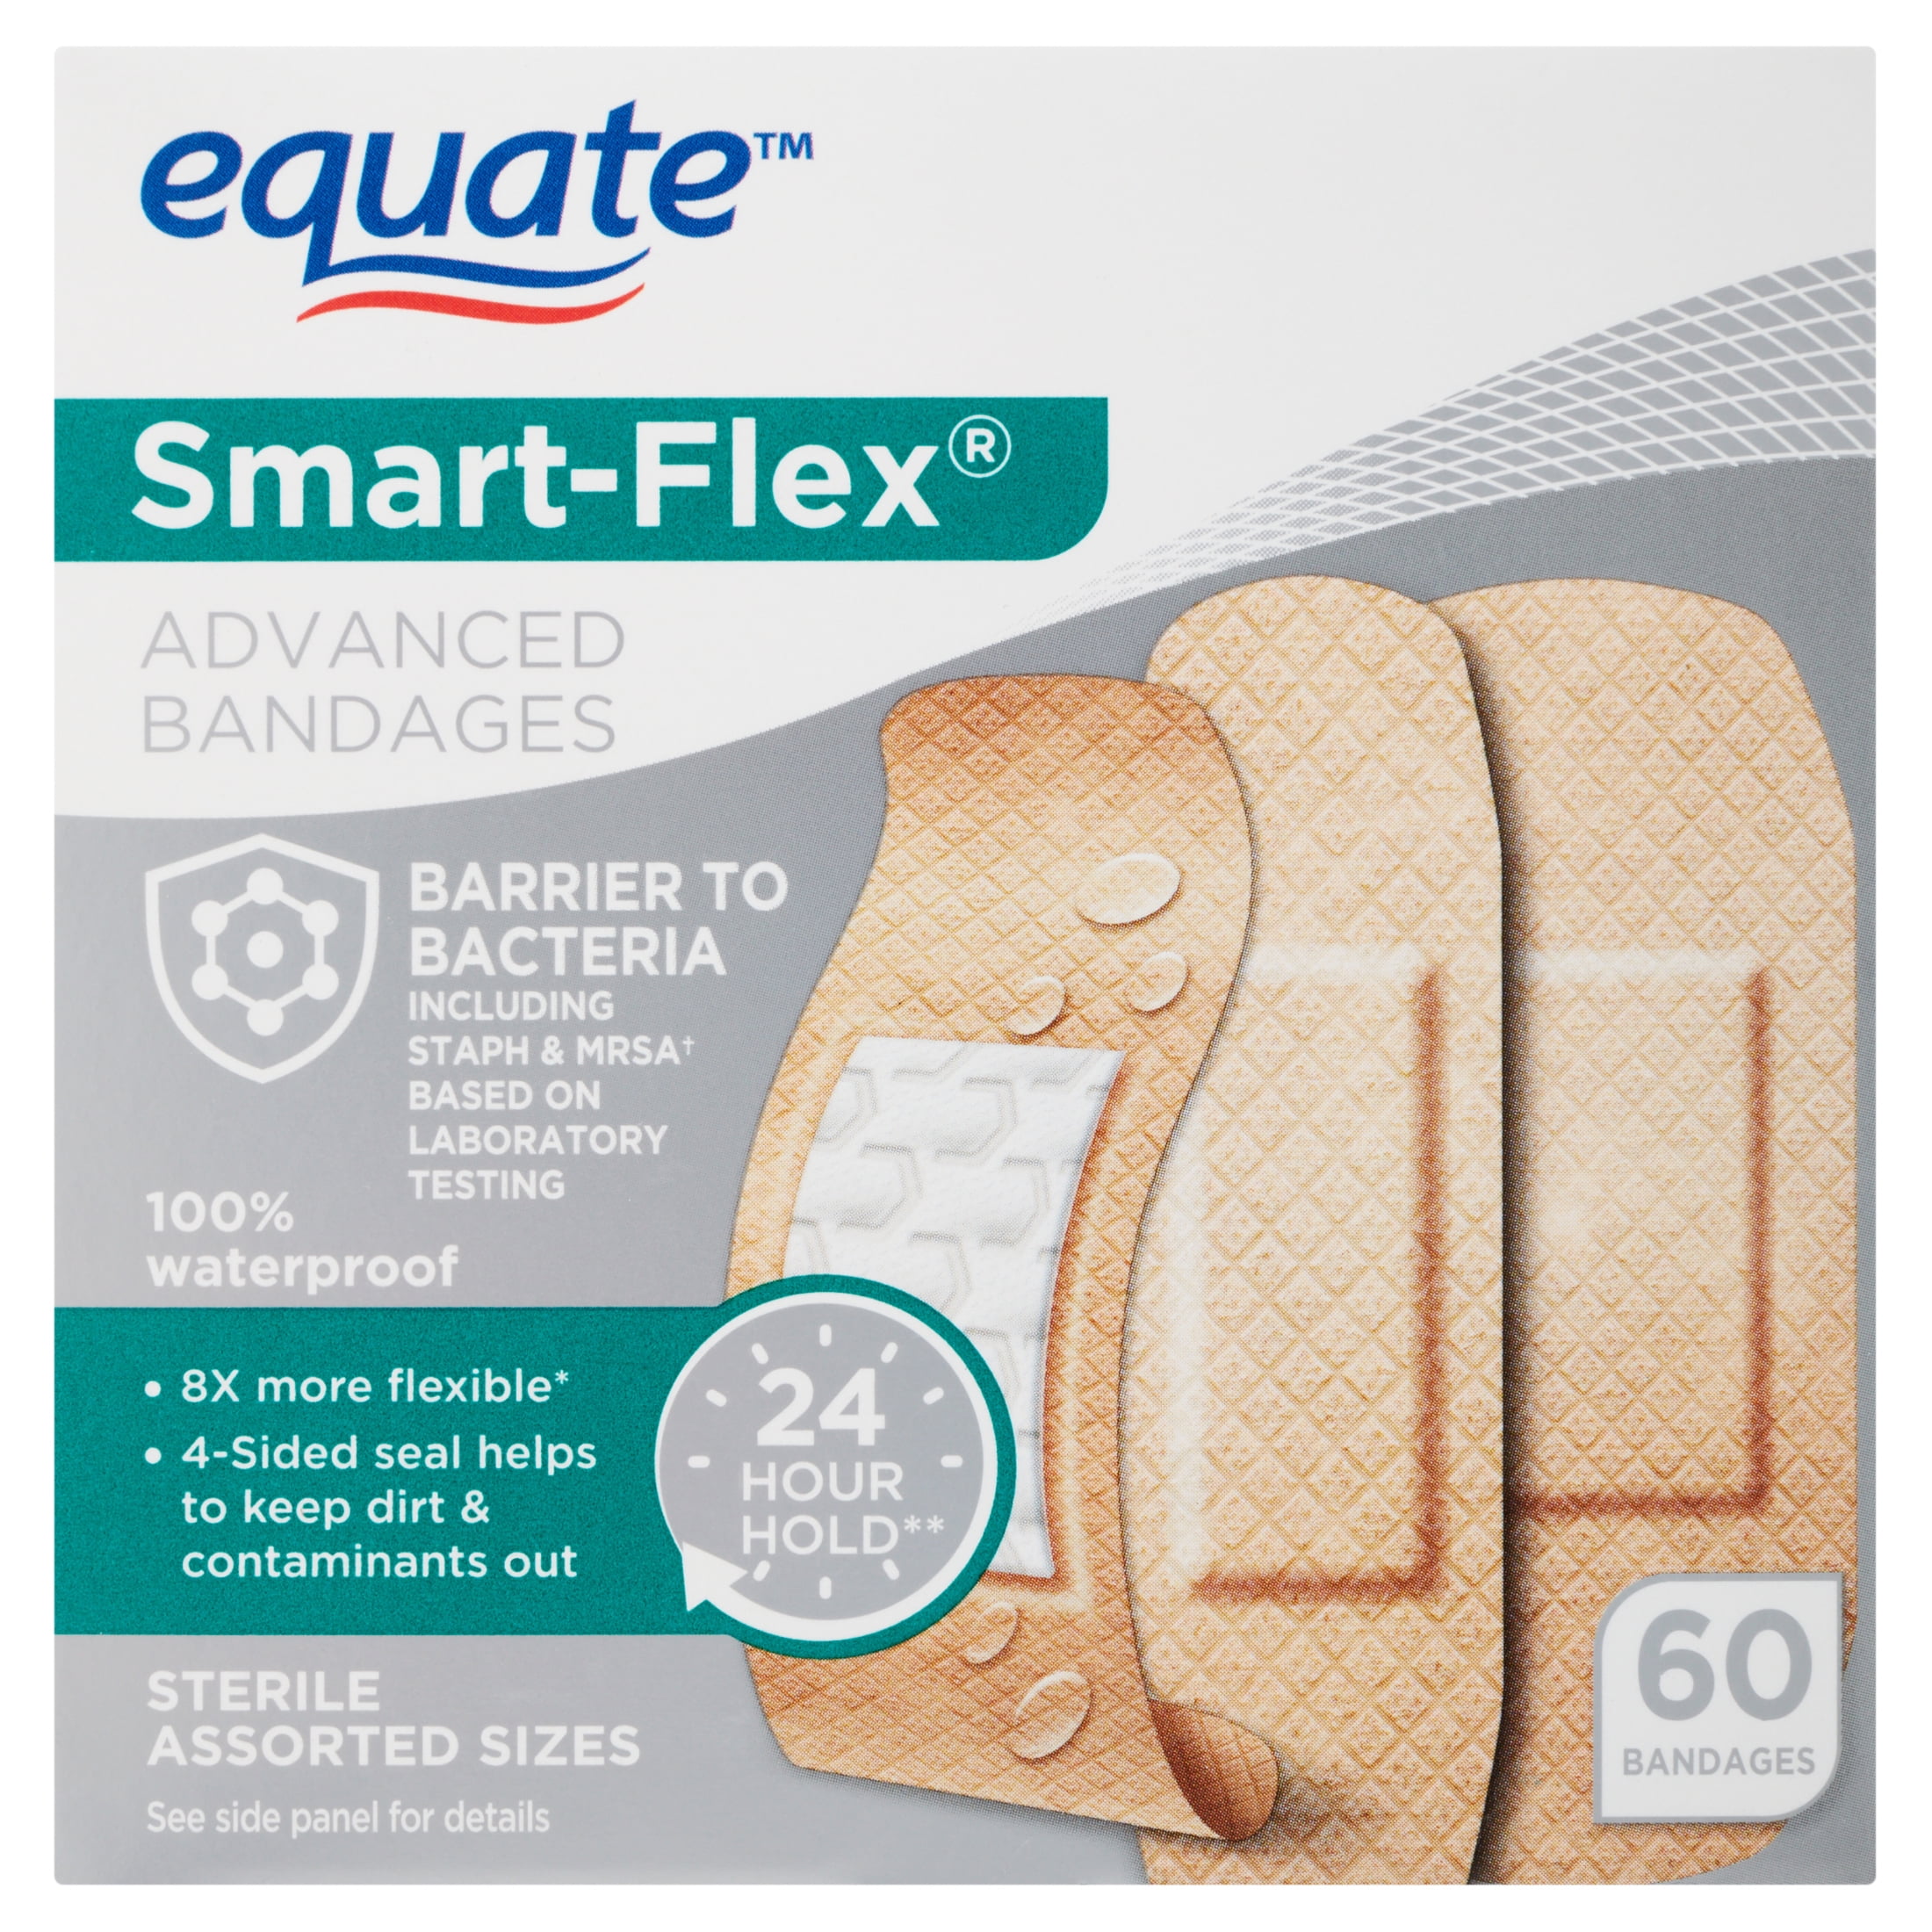 Equate Smart-Flex Advanced Bandages, 60 Count